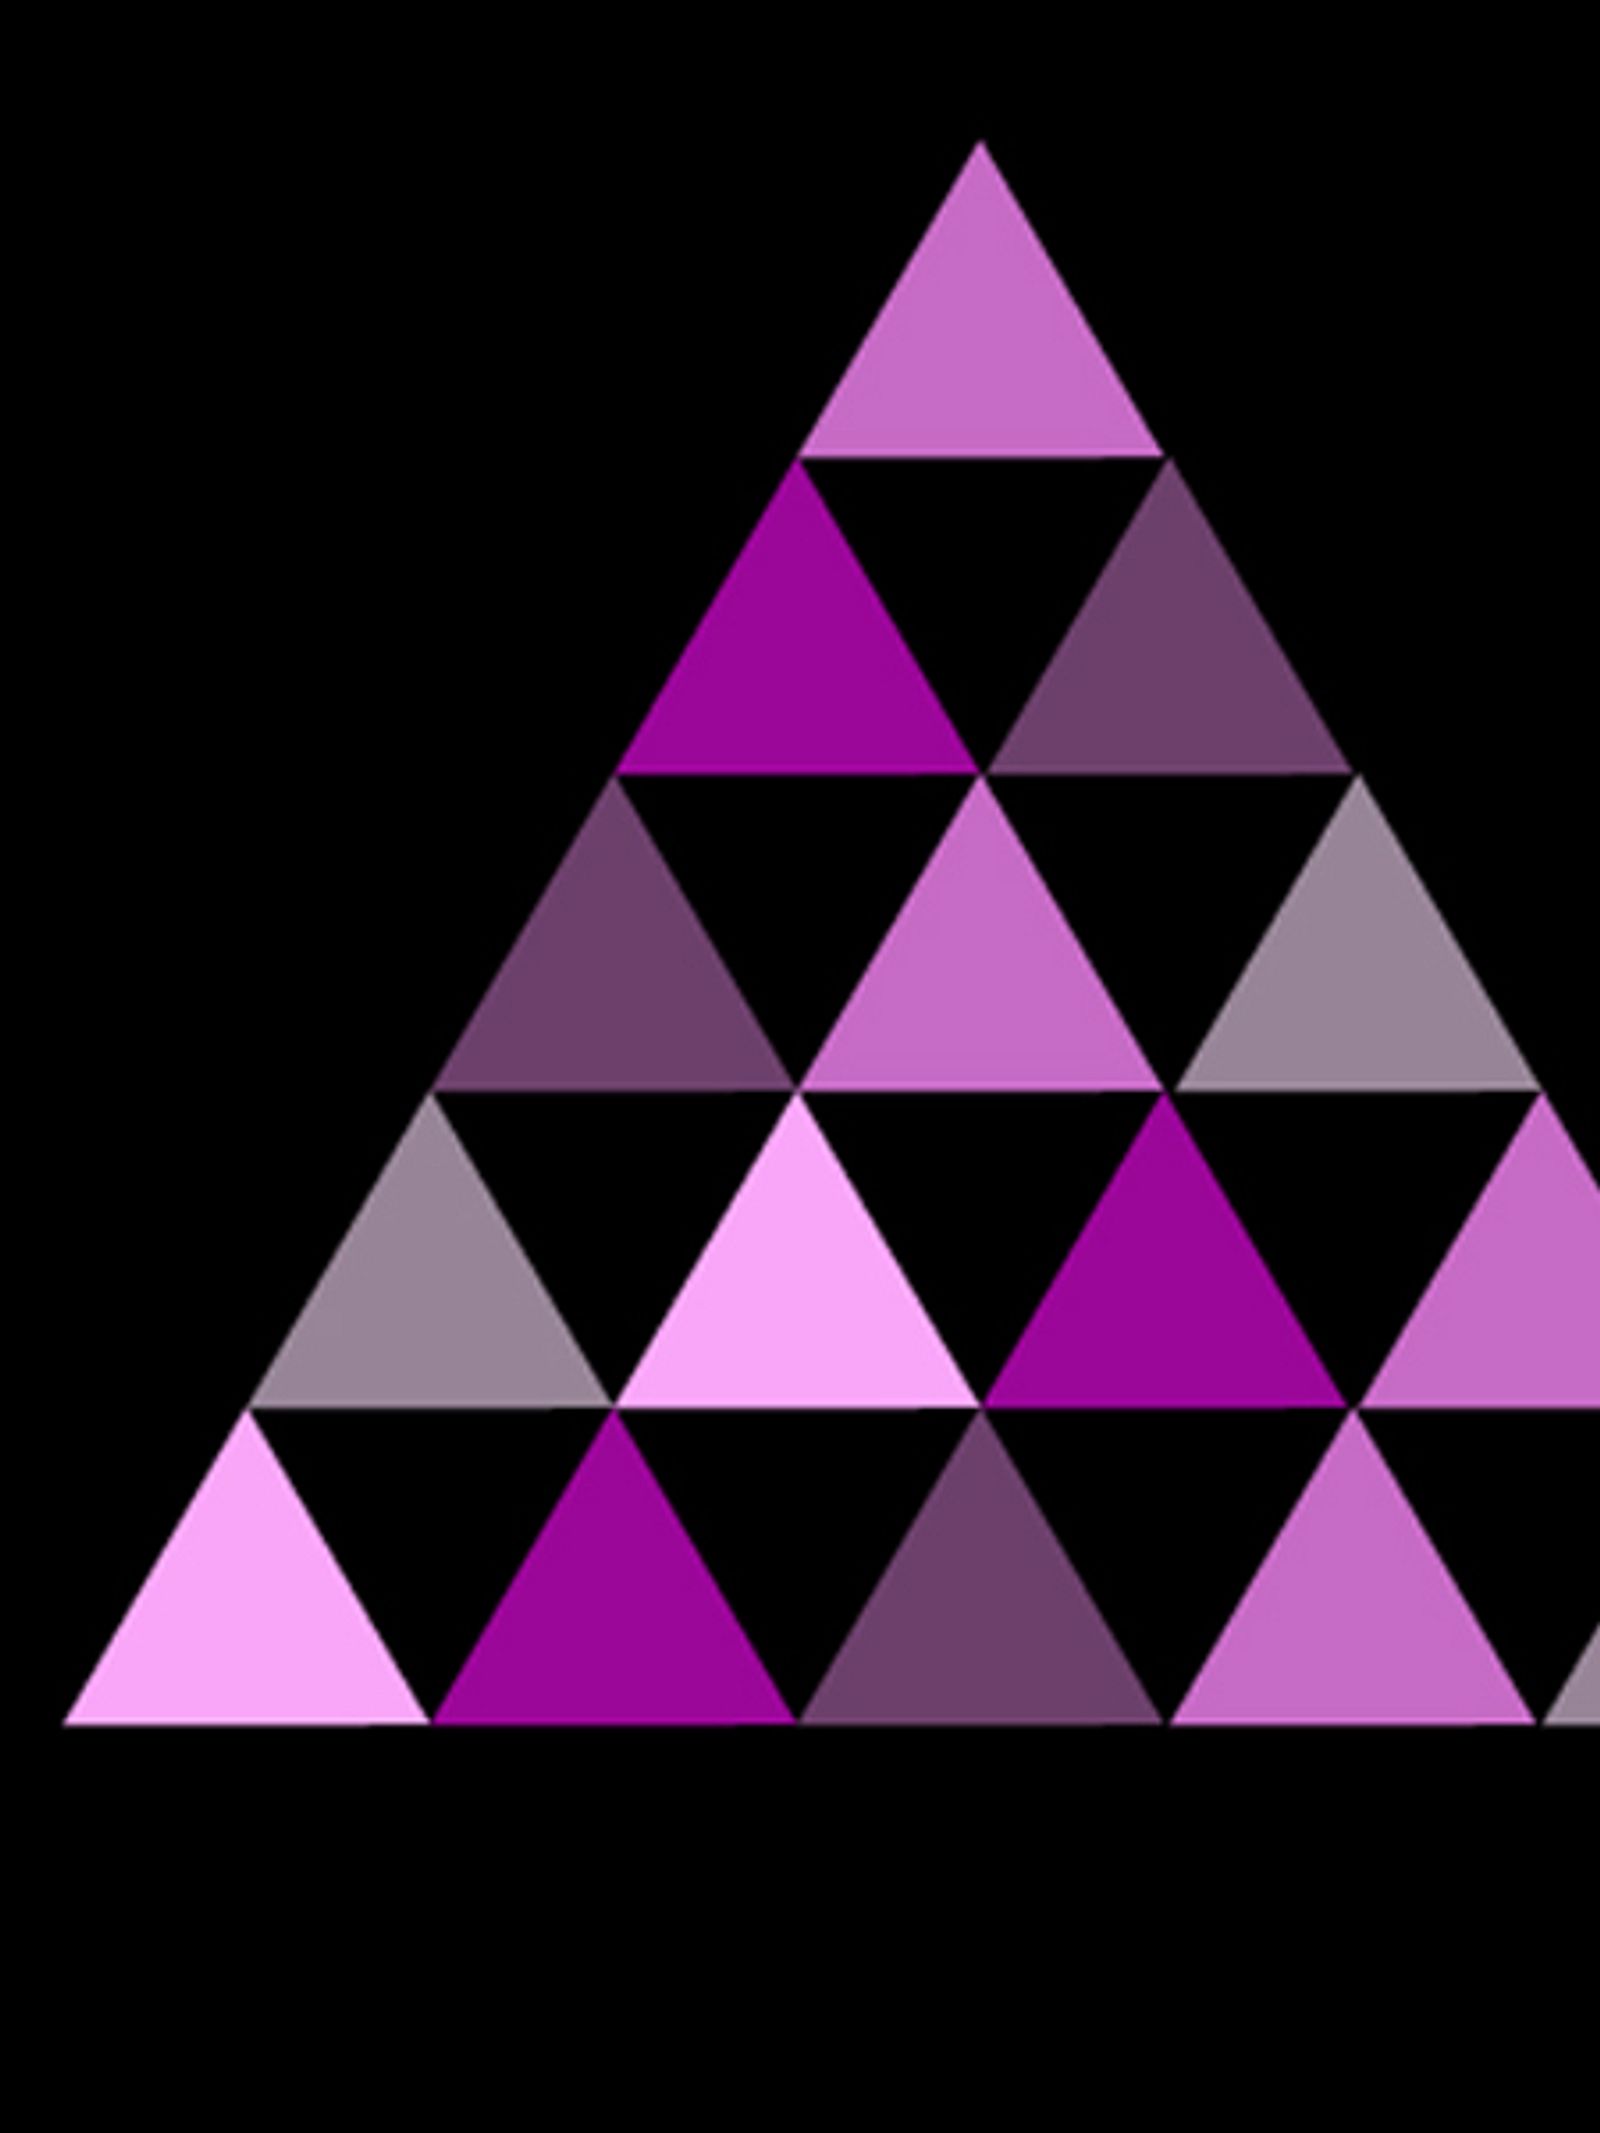 Dreiecks-Rätsel: Wie viele Dreiecke siehst du? | Wunderweib